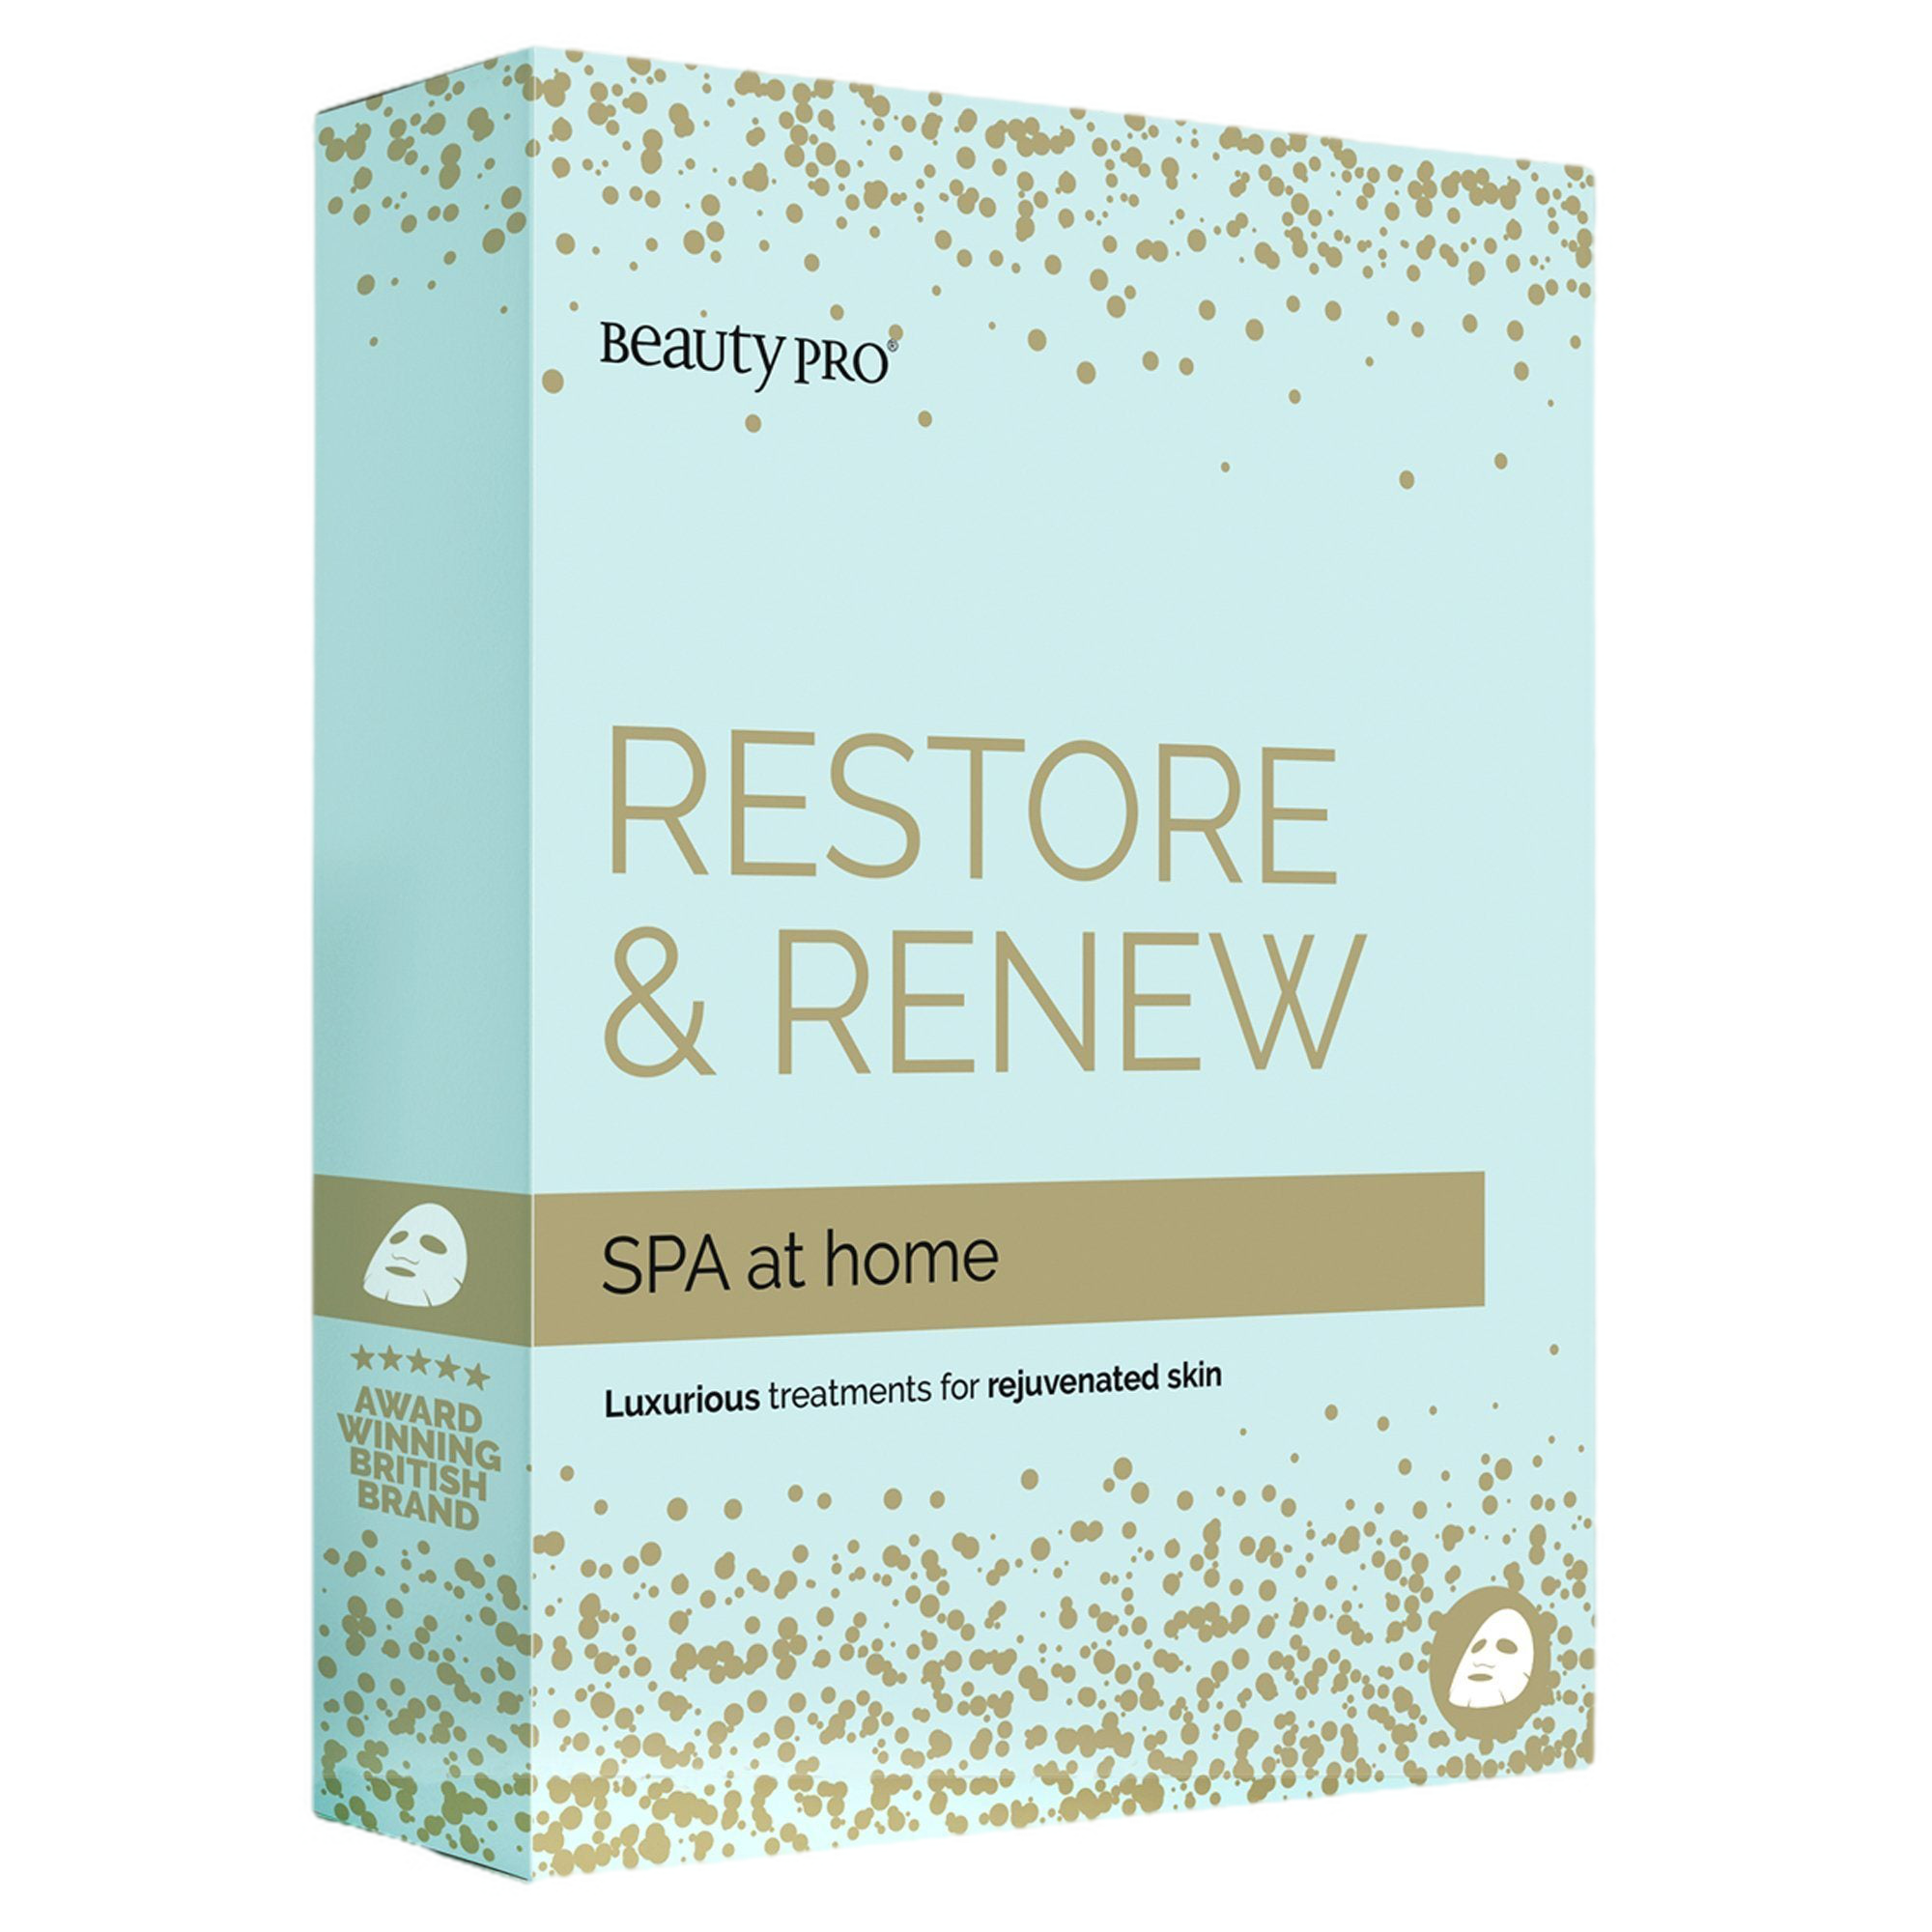 Beauty Pro SPA at home: Restore & Renew set